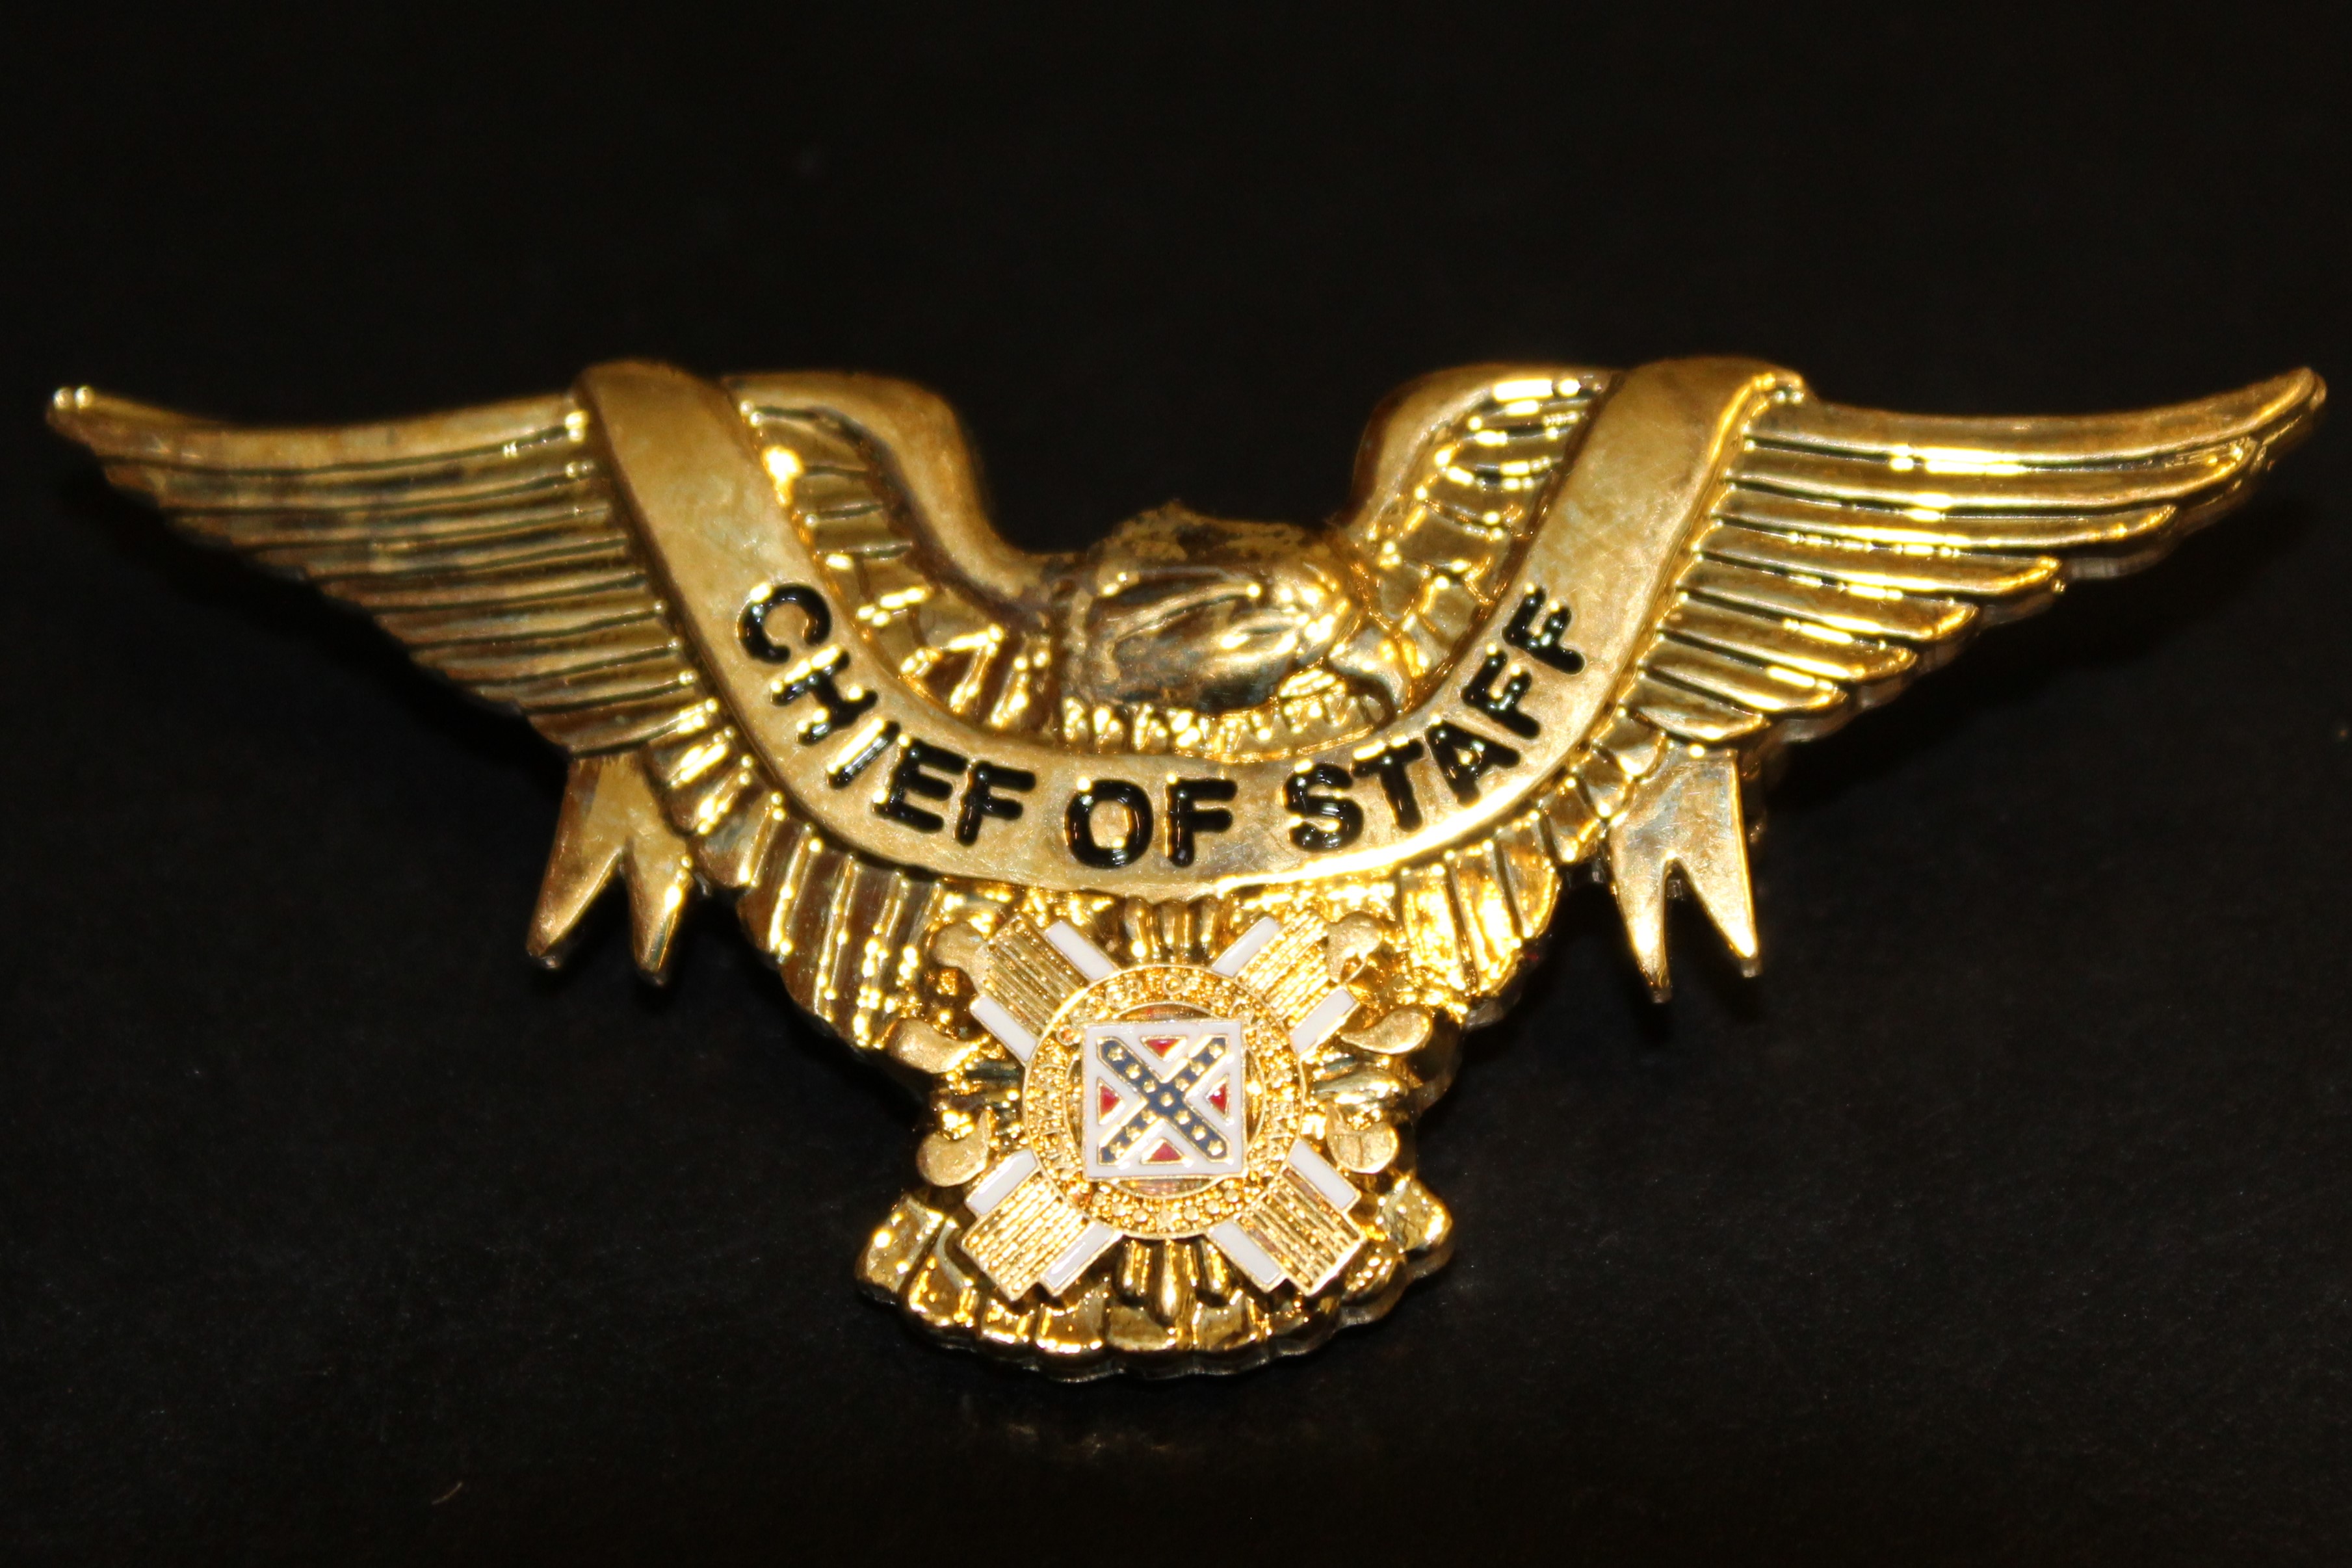 Eagle, Chief of Staff